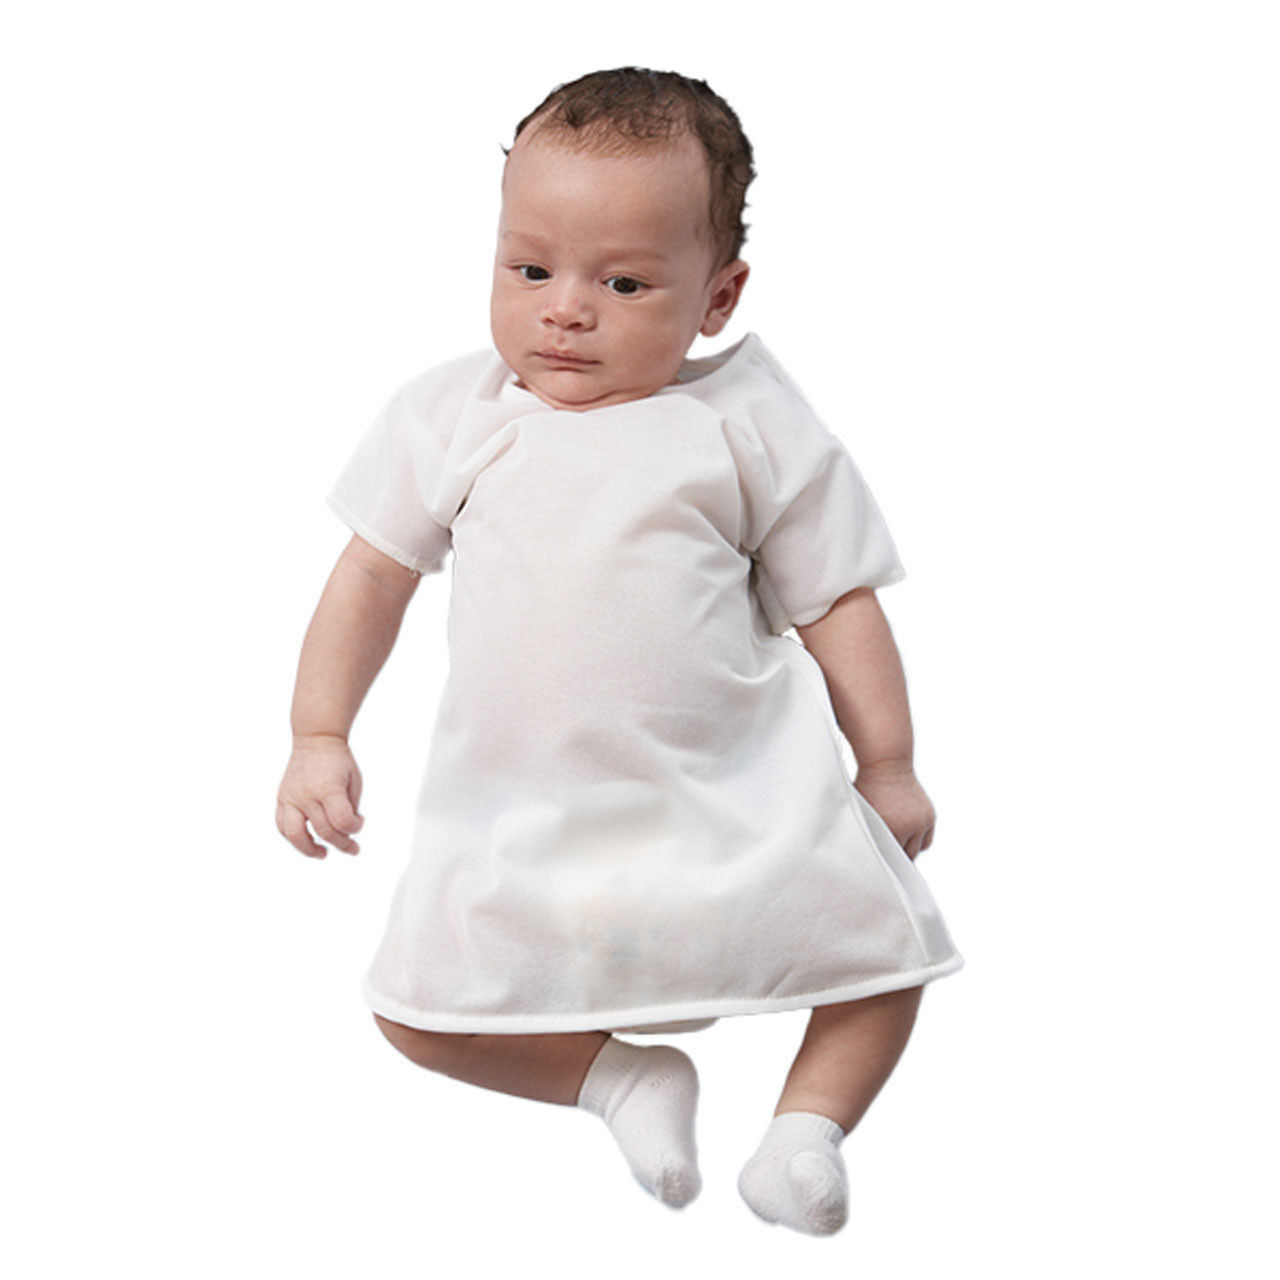 pediatric hospital gowns white in bulk fashion seal healthcare 65010.1709722438